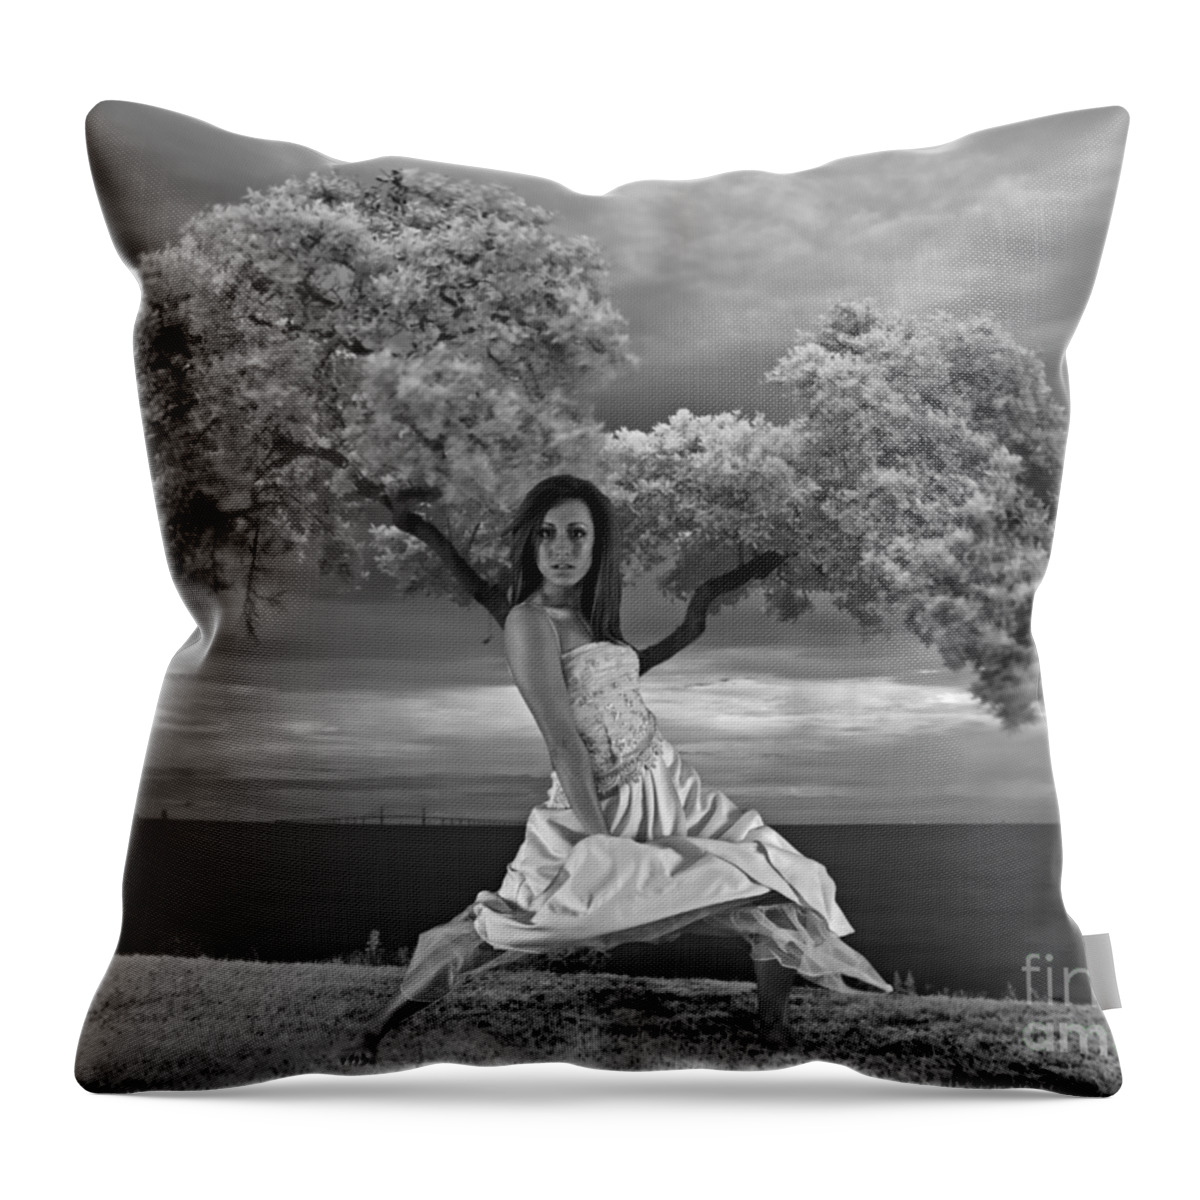 Girl Throw Pillow featuring the photograph Tree Girl 1209040 by Rolf Bertram